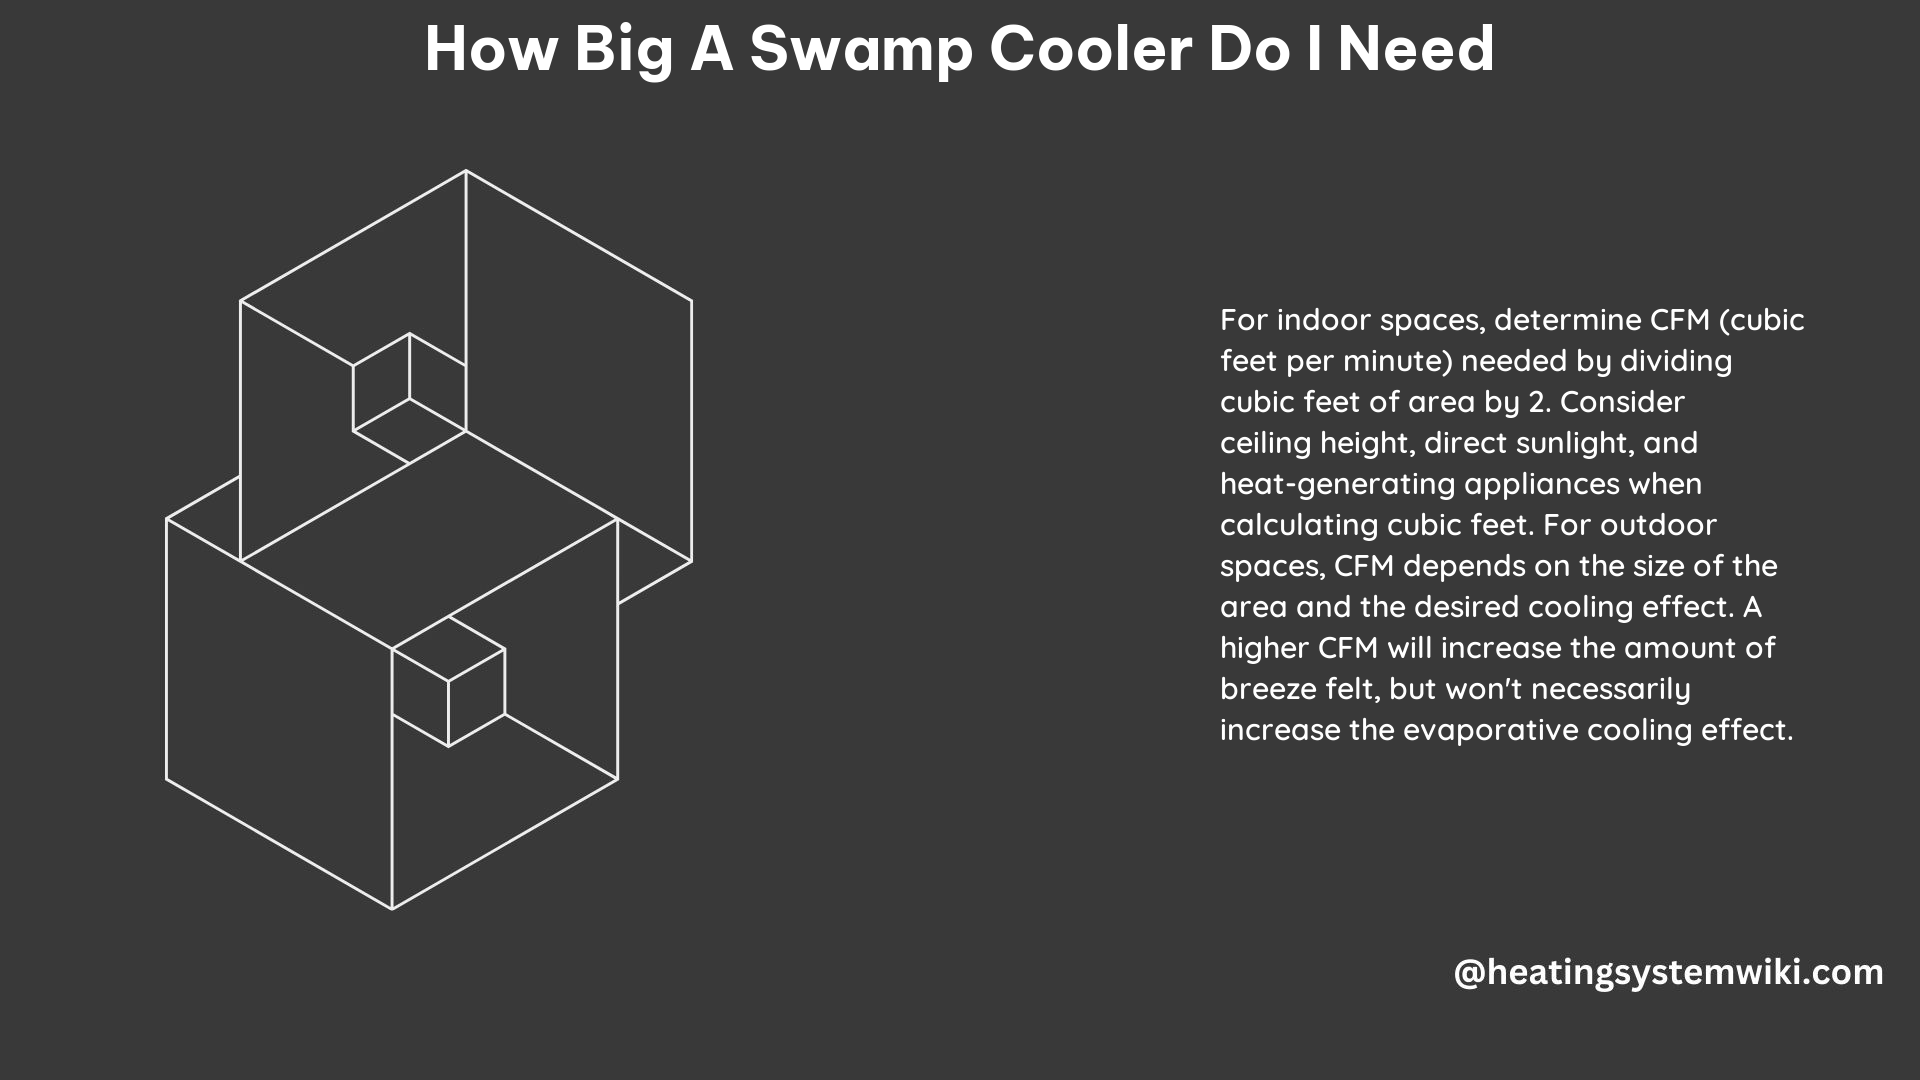 How Big a Swamp Cooler Do I Need